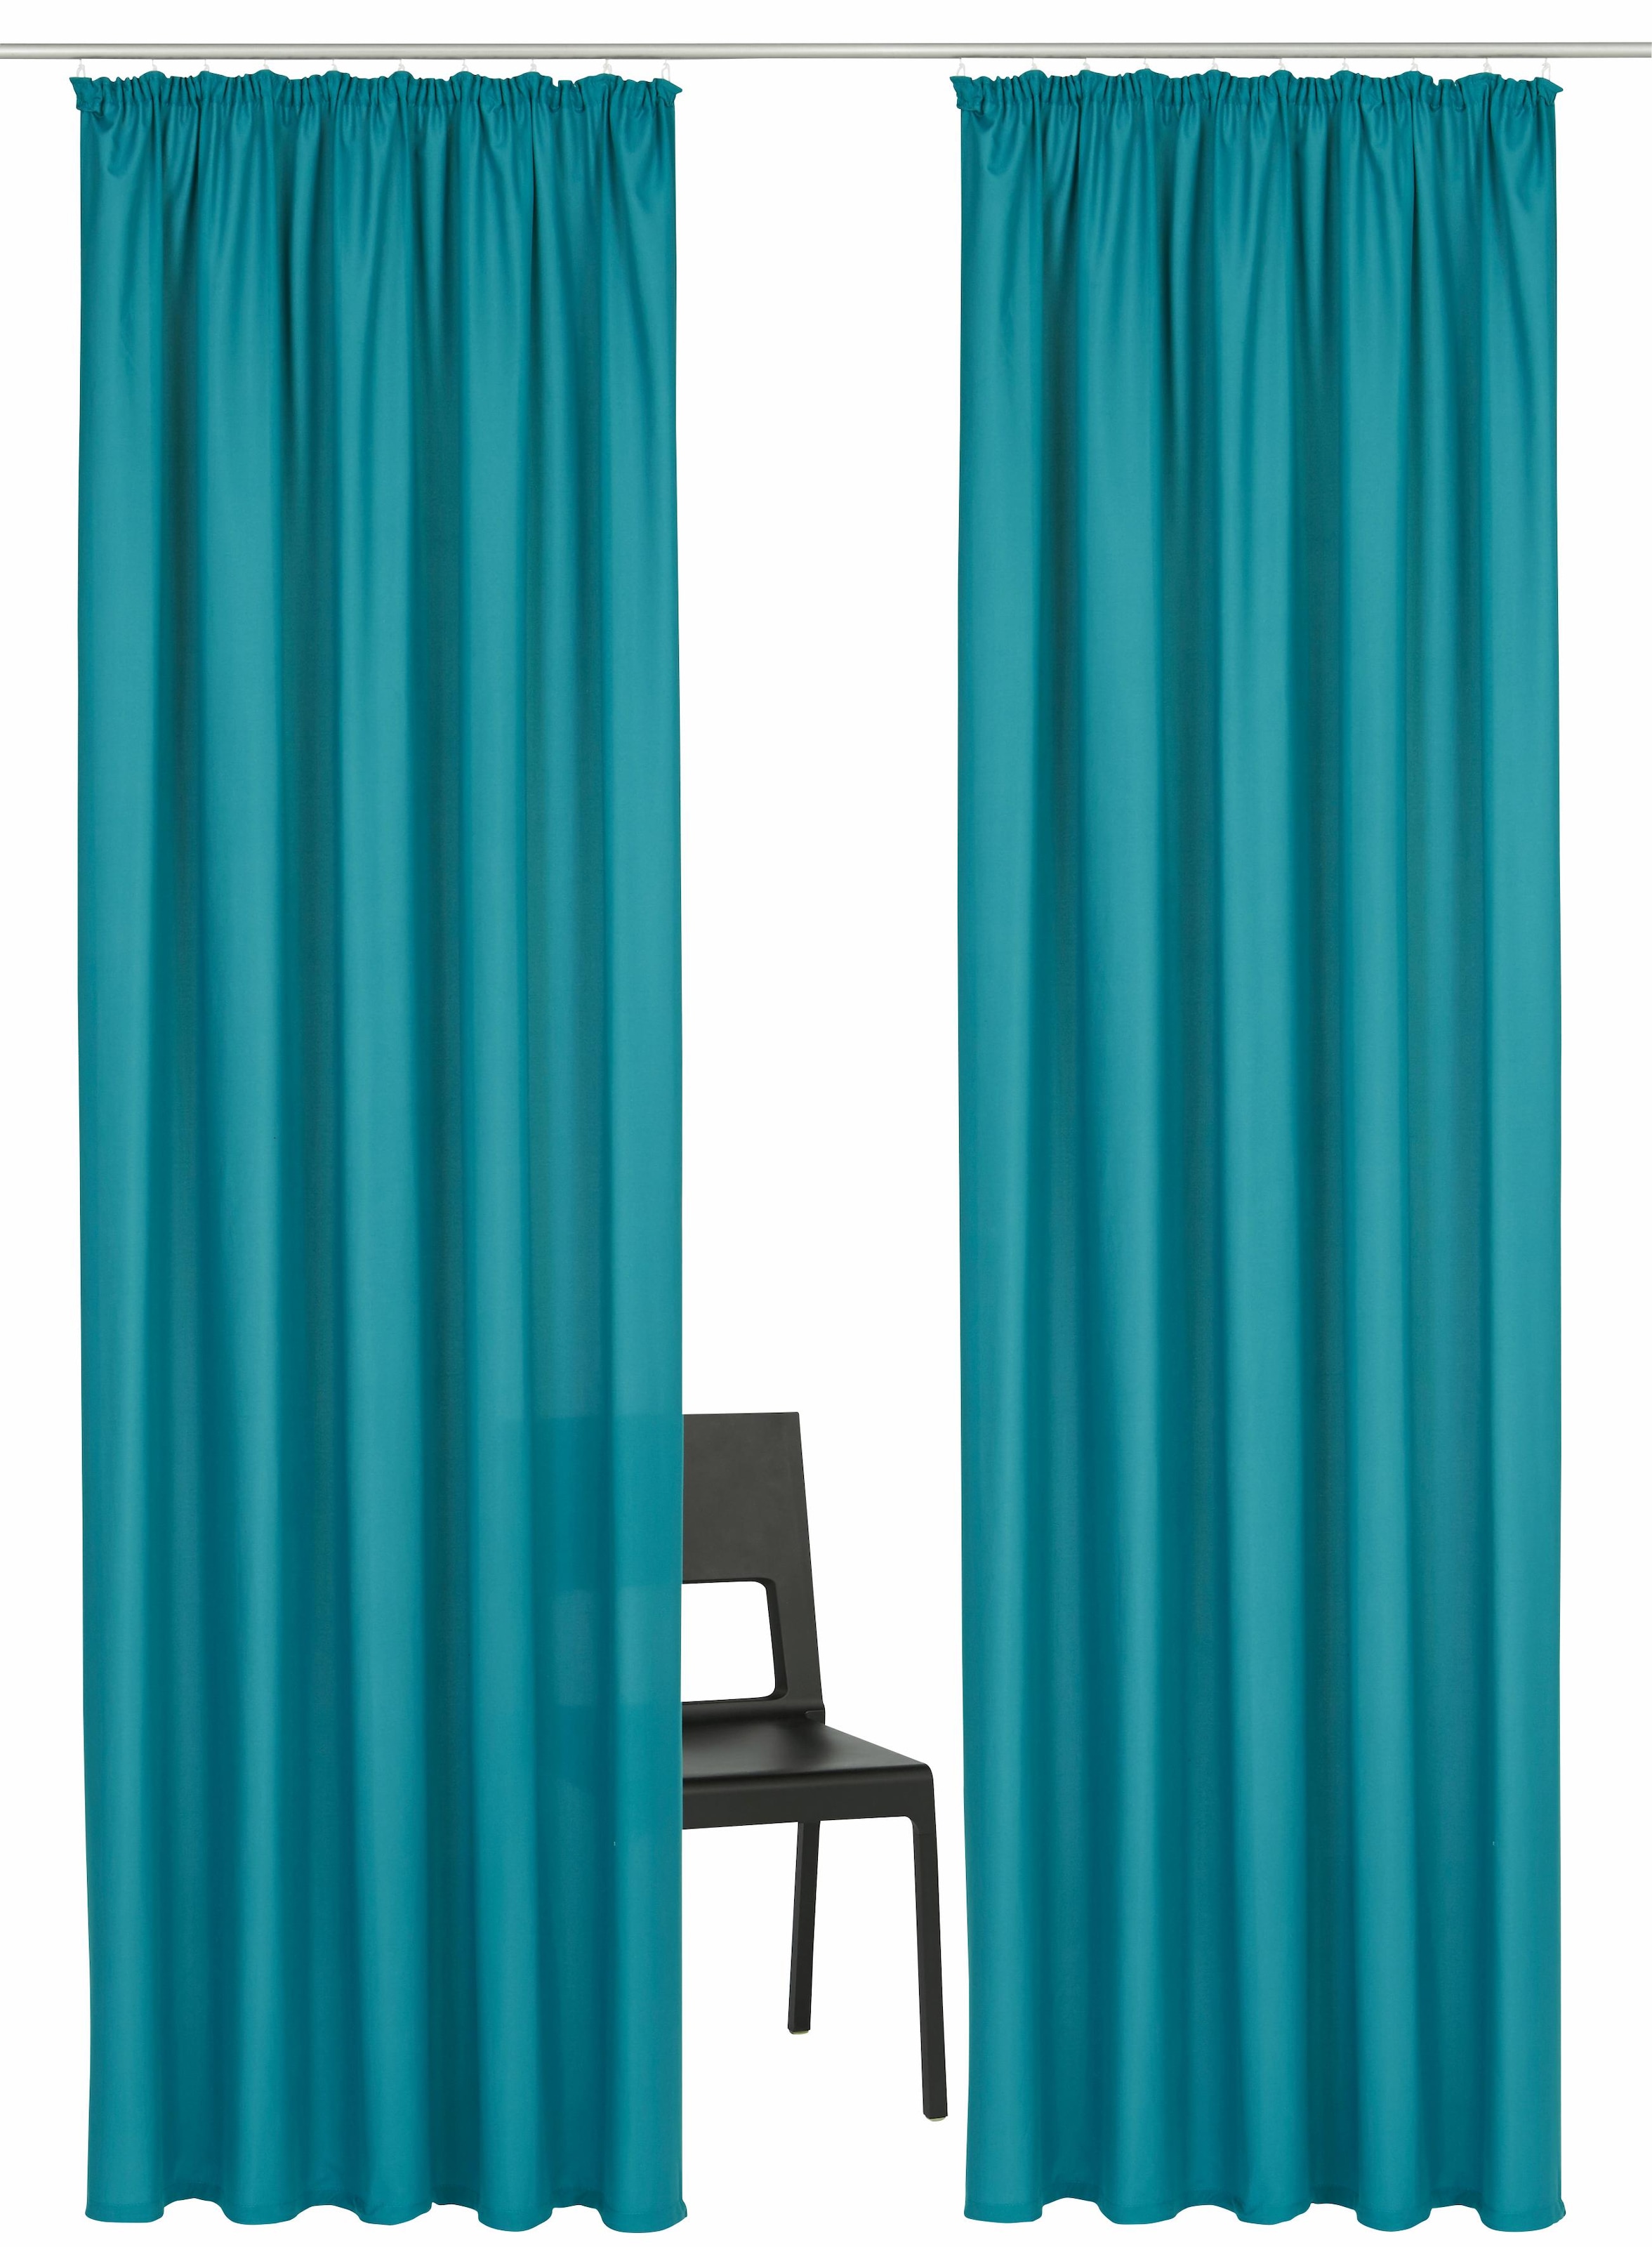 Home affaire Vorhang »Parry«, (2 St.), 2-er Set, blickdicht, monochrom, basic, einfarbig